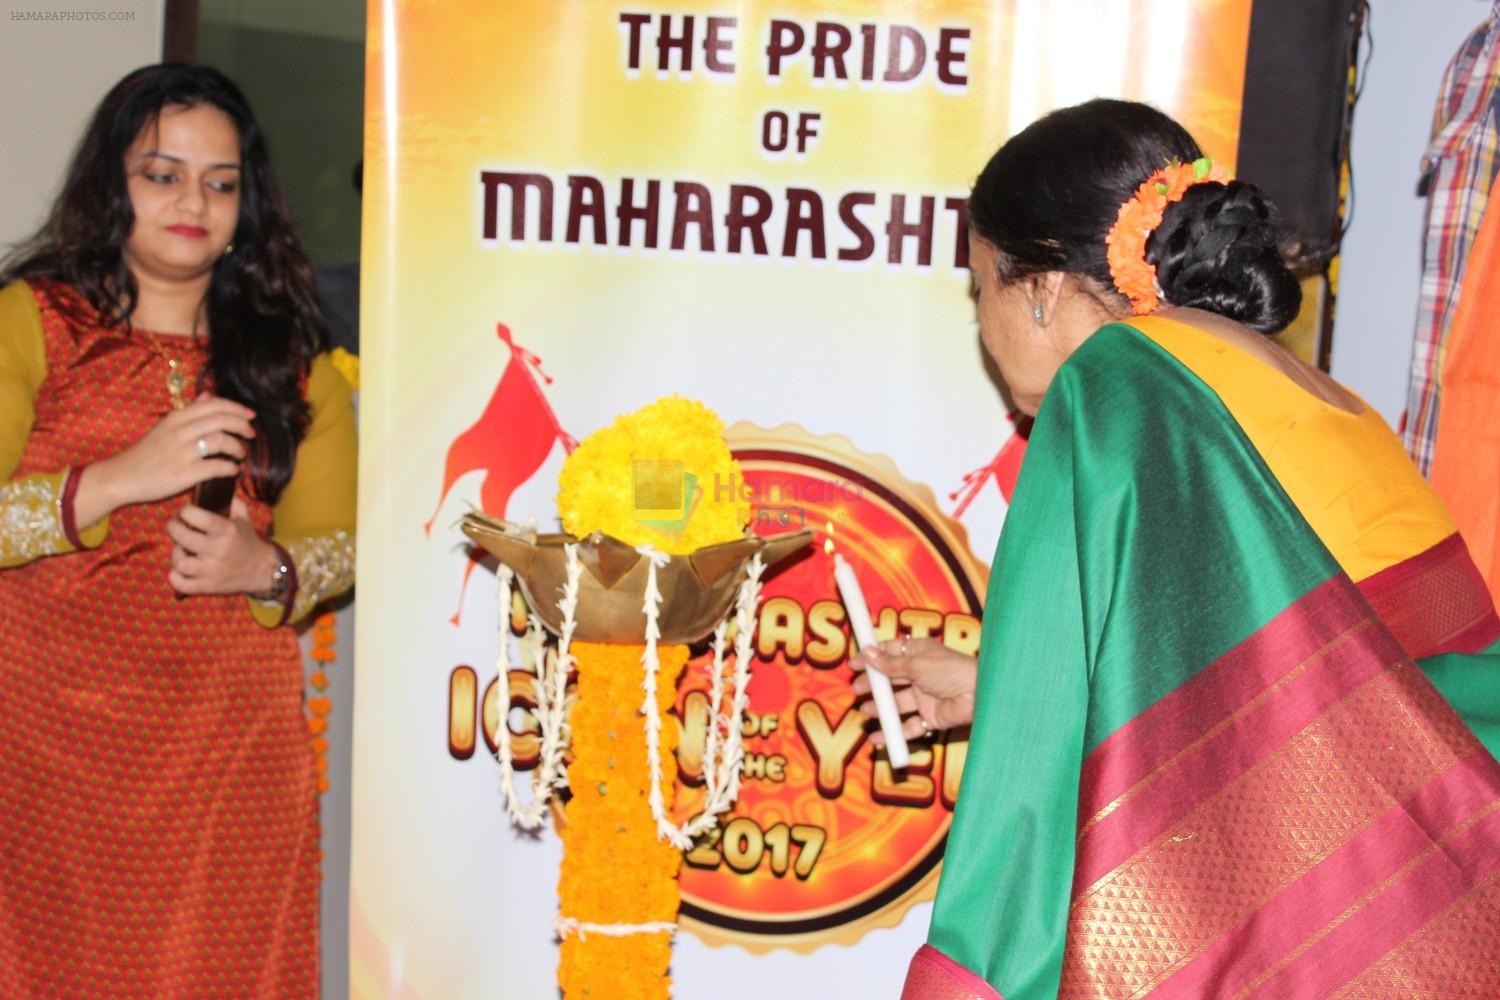 Nagraj Manjule Felcitated With Maharashtra Icon Award With Maharashtra Day Celebration on 27th April 2017